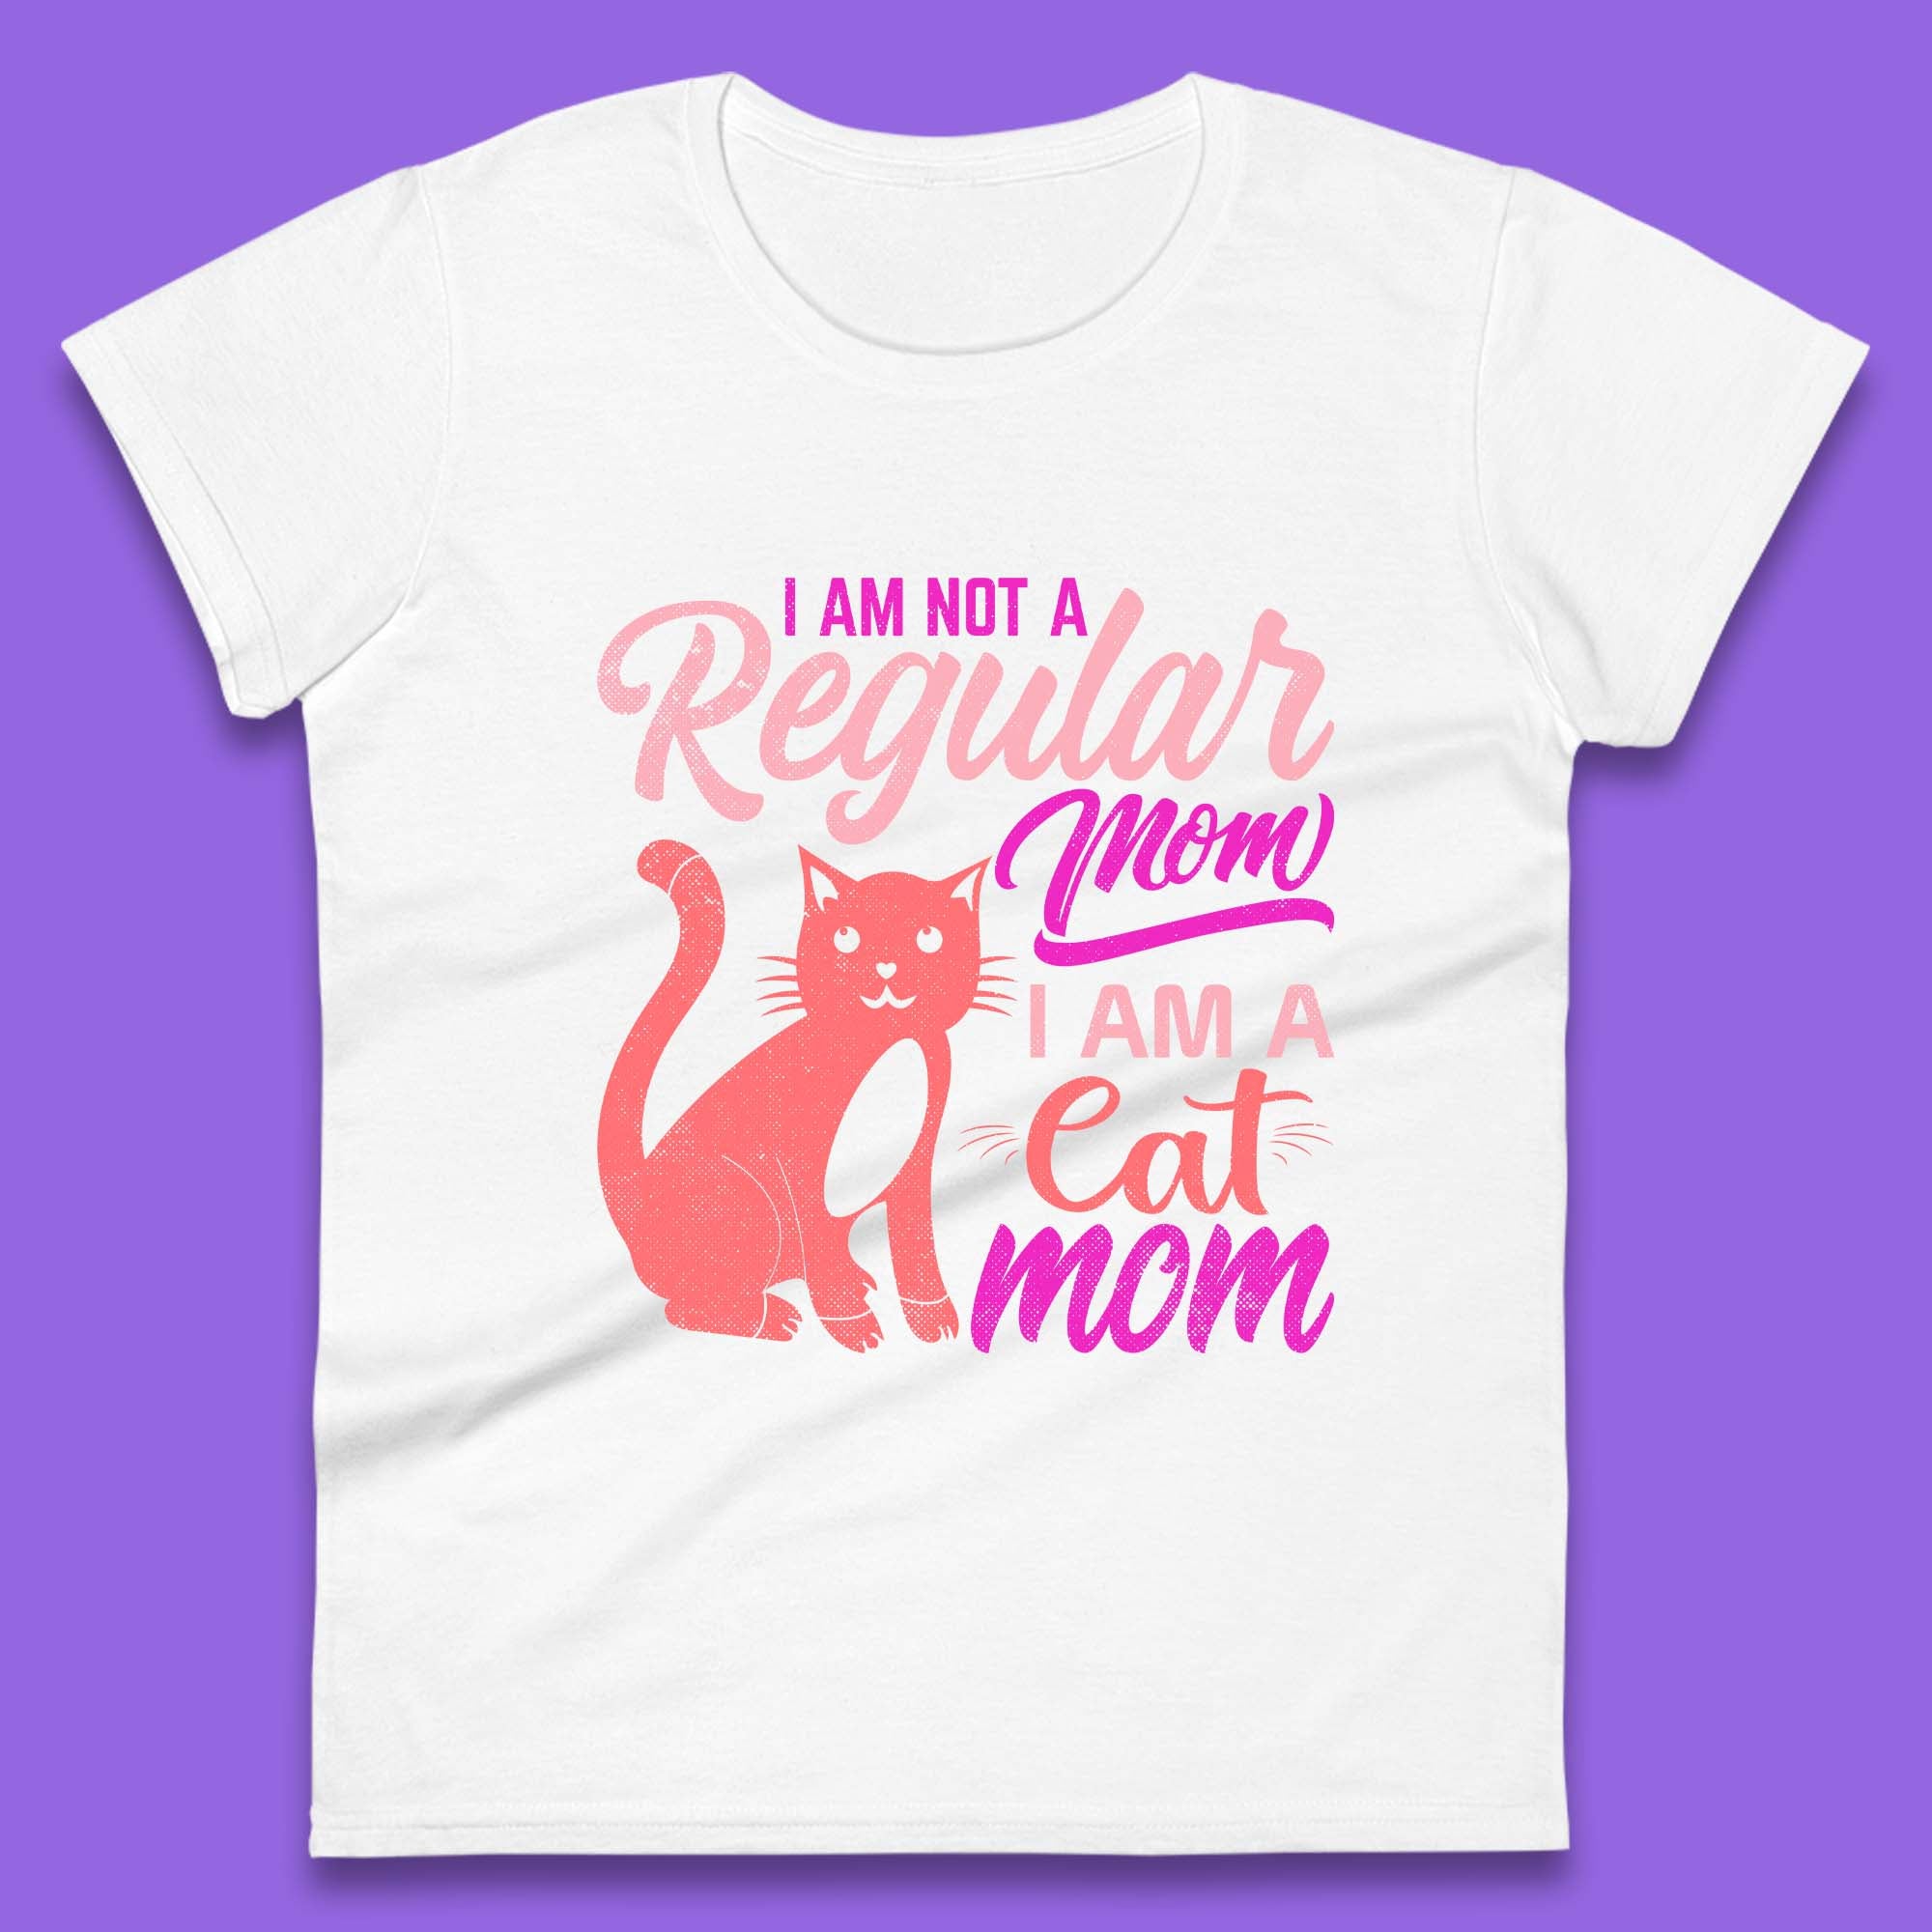 I Am A Cat Mom Womens T-Shirt